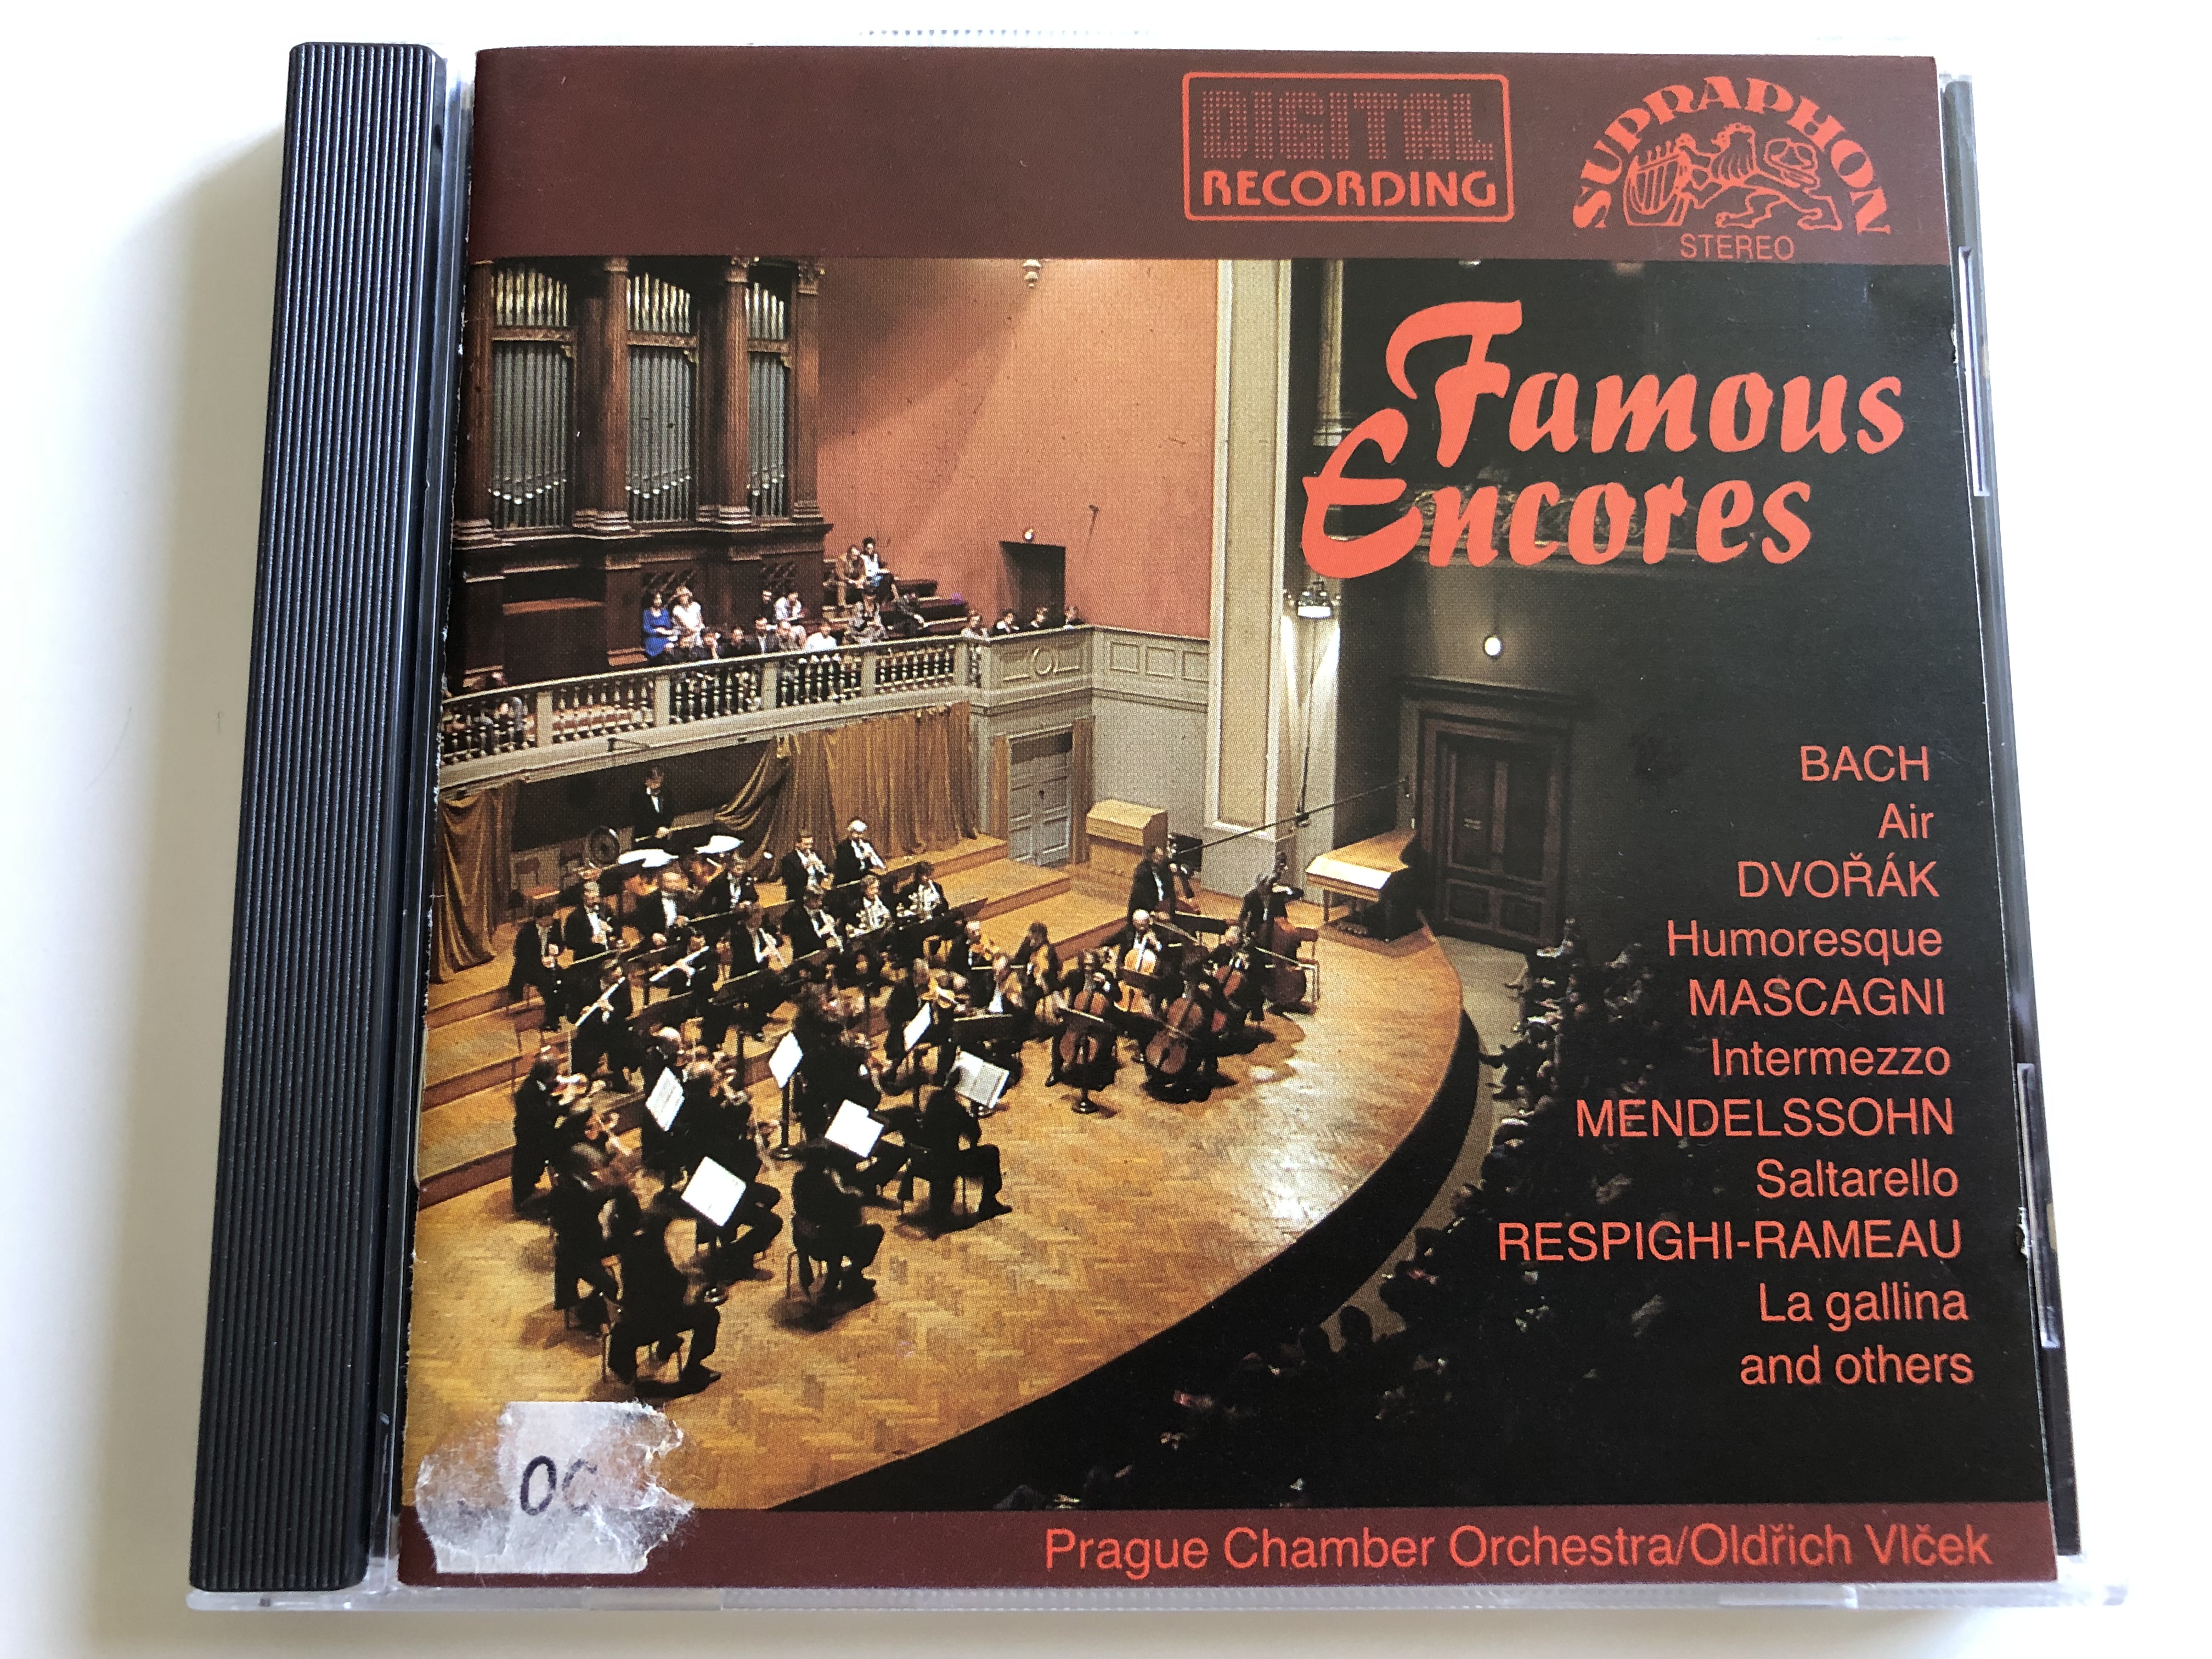 famous-encores-bach-air-dvorak-humoreque-mascagni-intermezzo-mendelssohn-saltarello-prague-chamber-orchestra-conducted-by-oldrich-vicek-audio-cd-1986-supraphon-1-.jpg